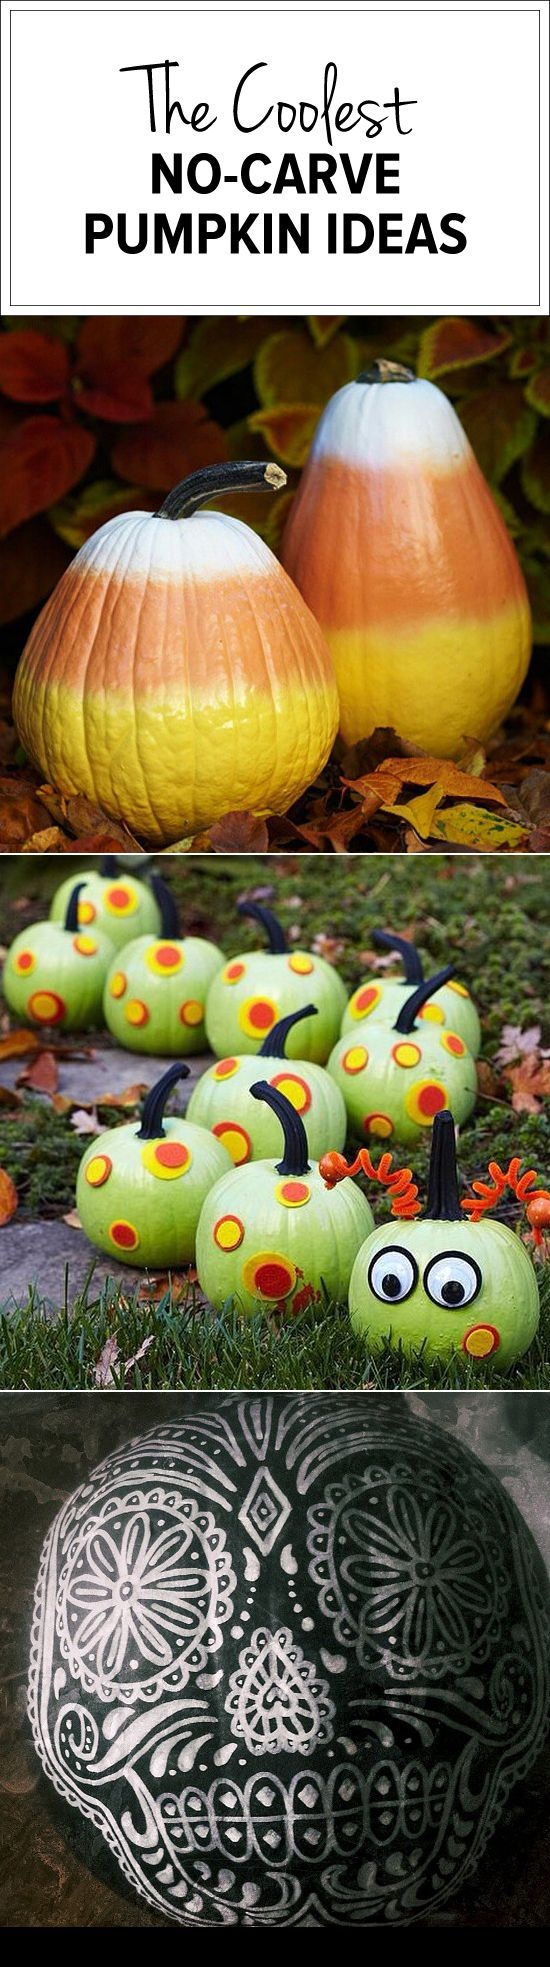 No-Carve Pumpkin Ideas